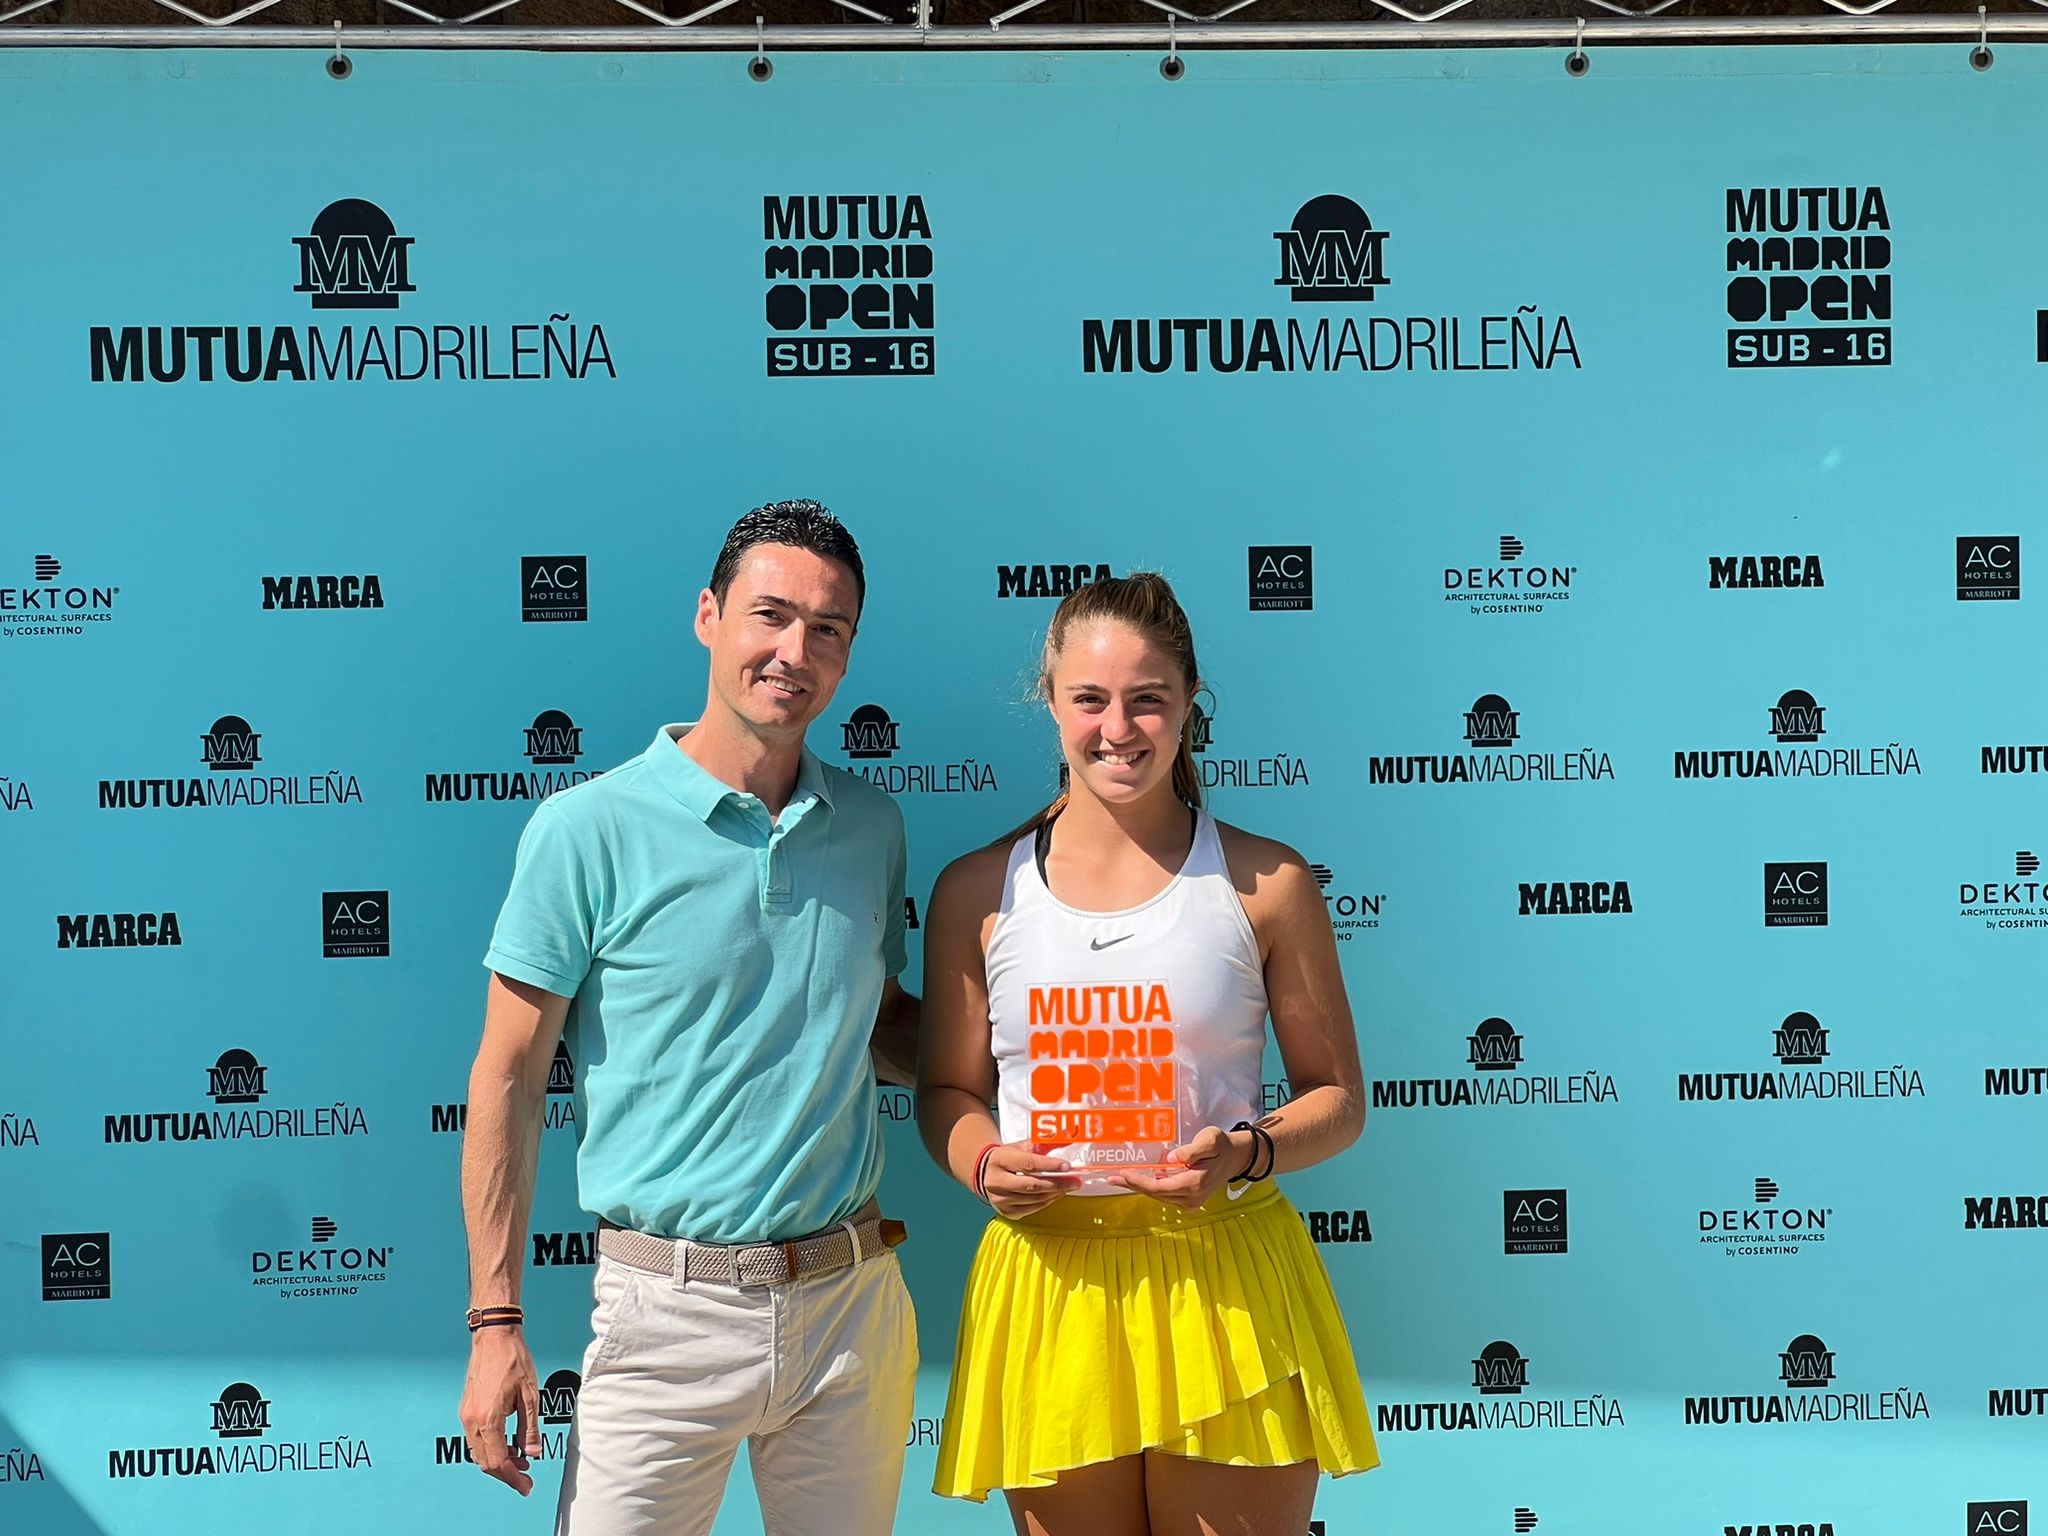 Marina Gatell, campeona del Mutua Madrid sub-16 de tenis, Club de Campo Villa de Madrid.